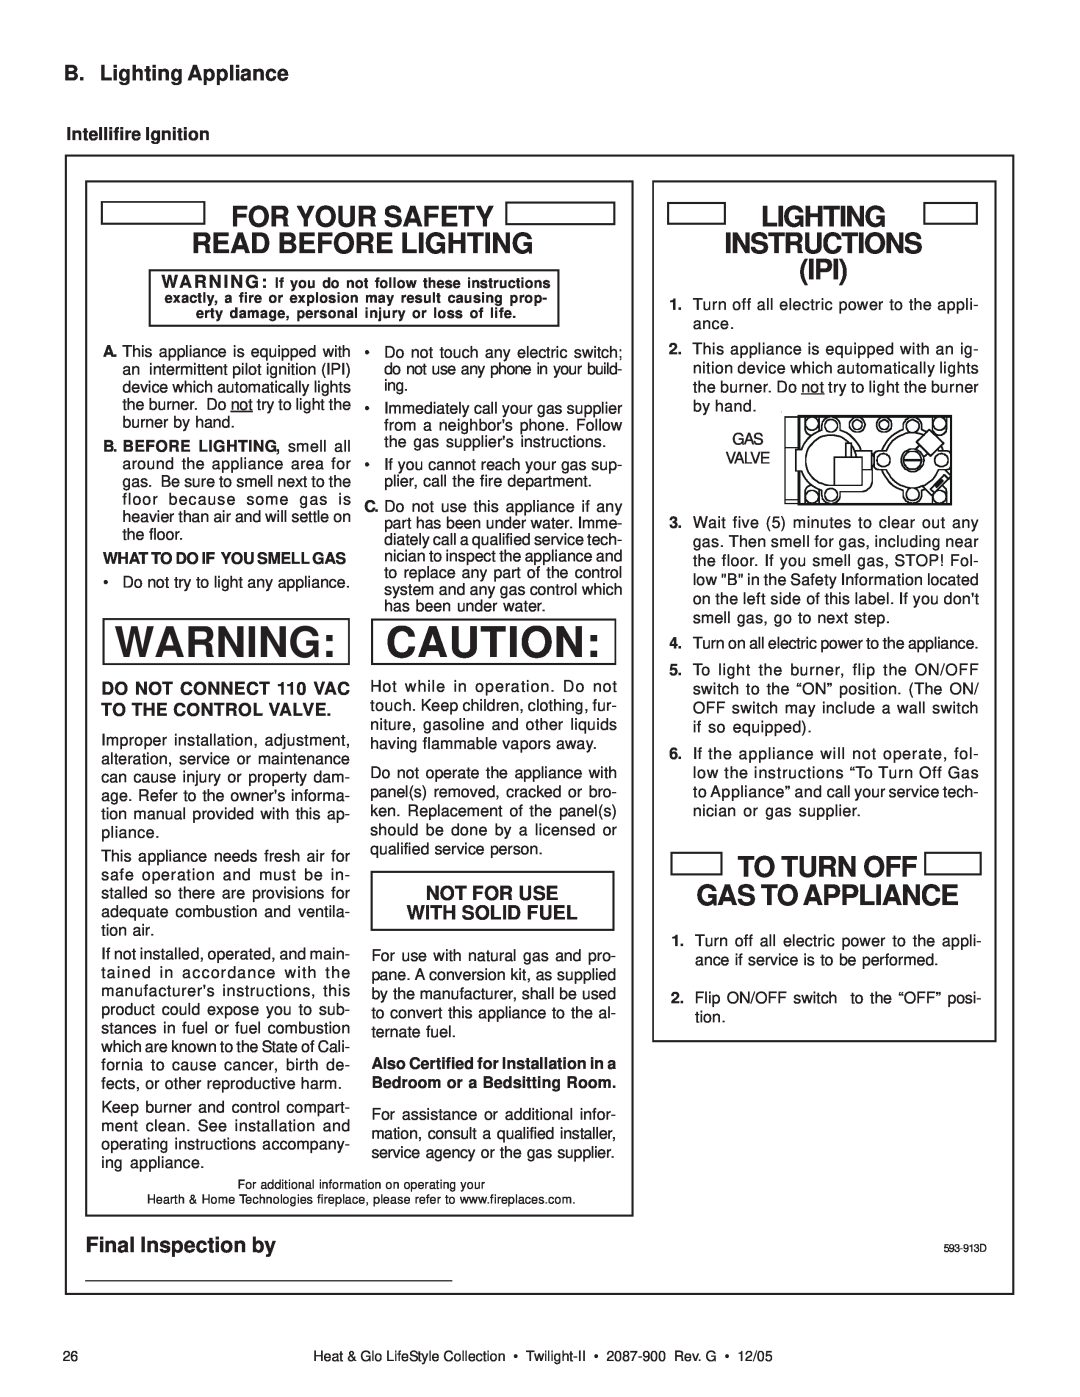 Heat & Glo LifeStyle TWILIGHT-II Warning Caution, B. Lighting Appliance, Final Inspection by, Lighting Instructions Ipi 